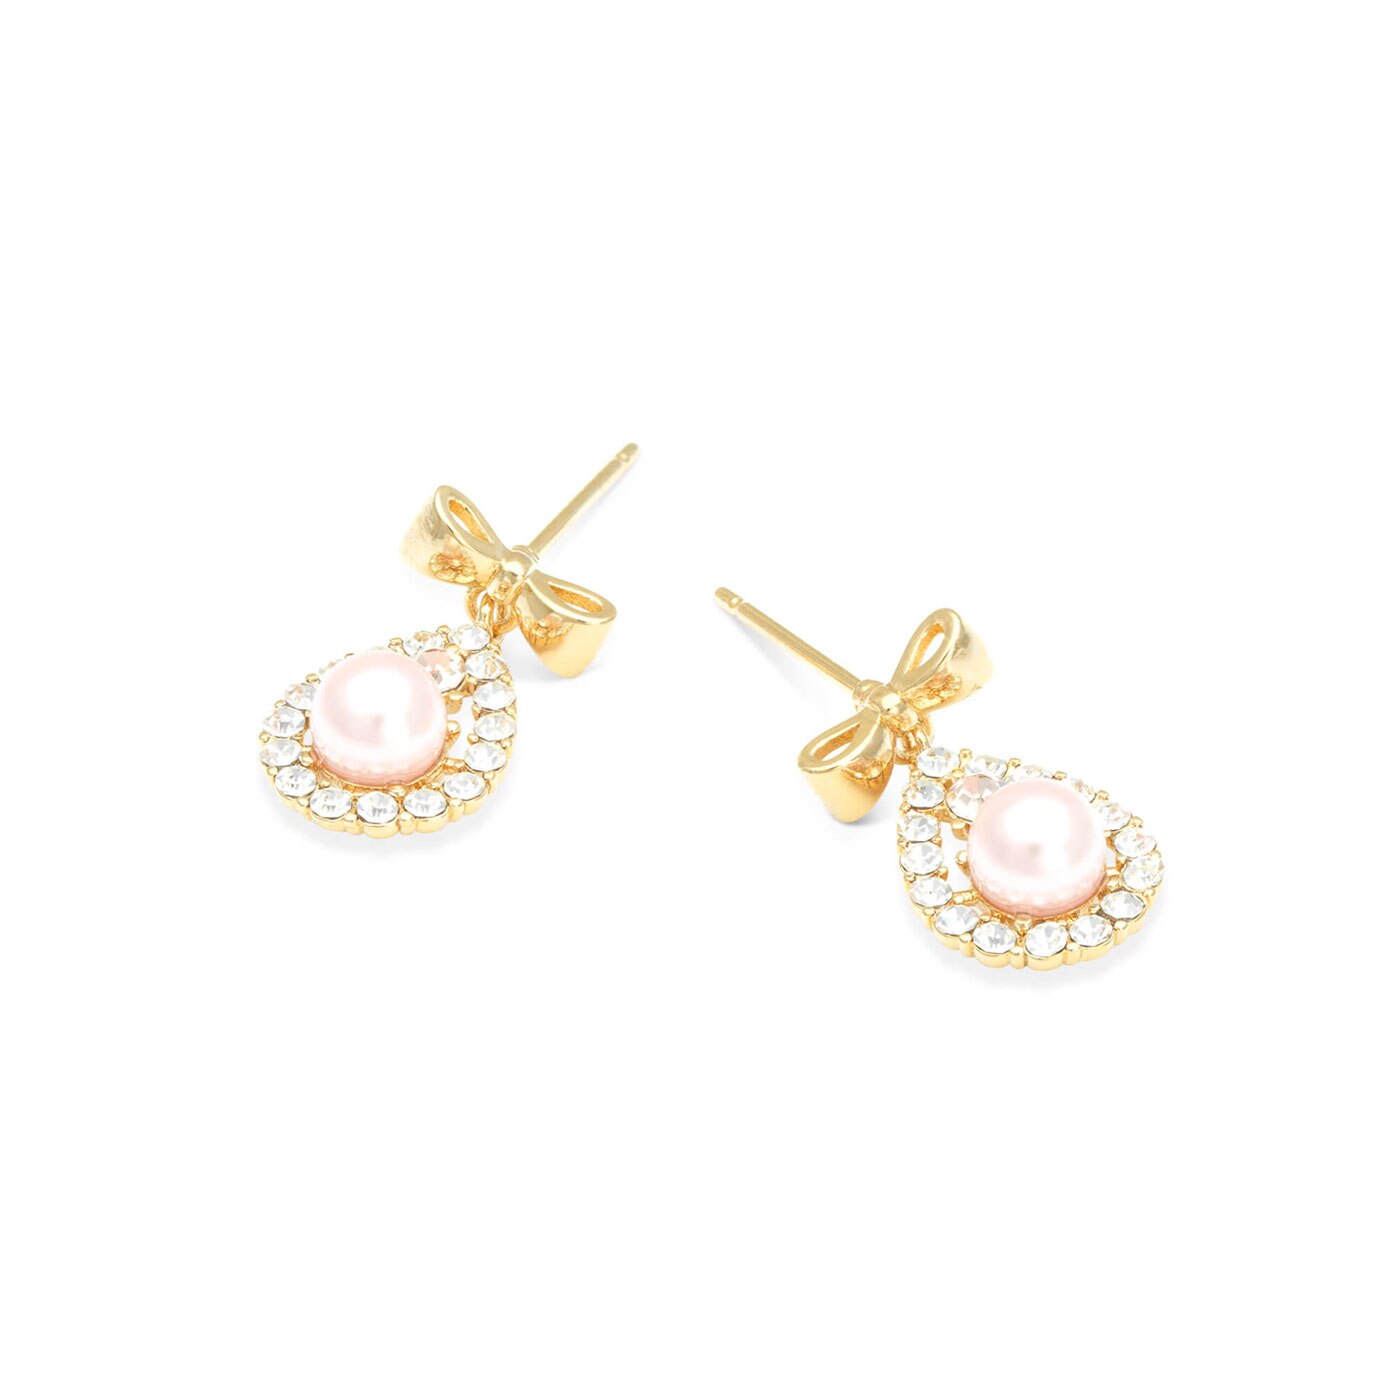 Petite Coco pearl earrings - Rosaline